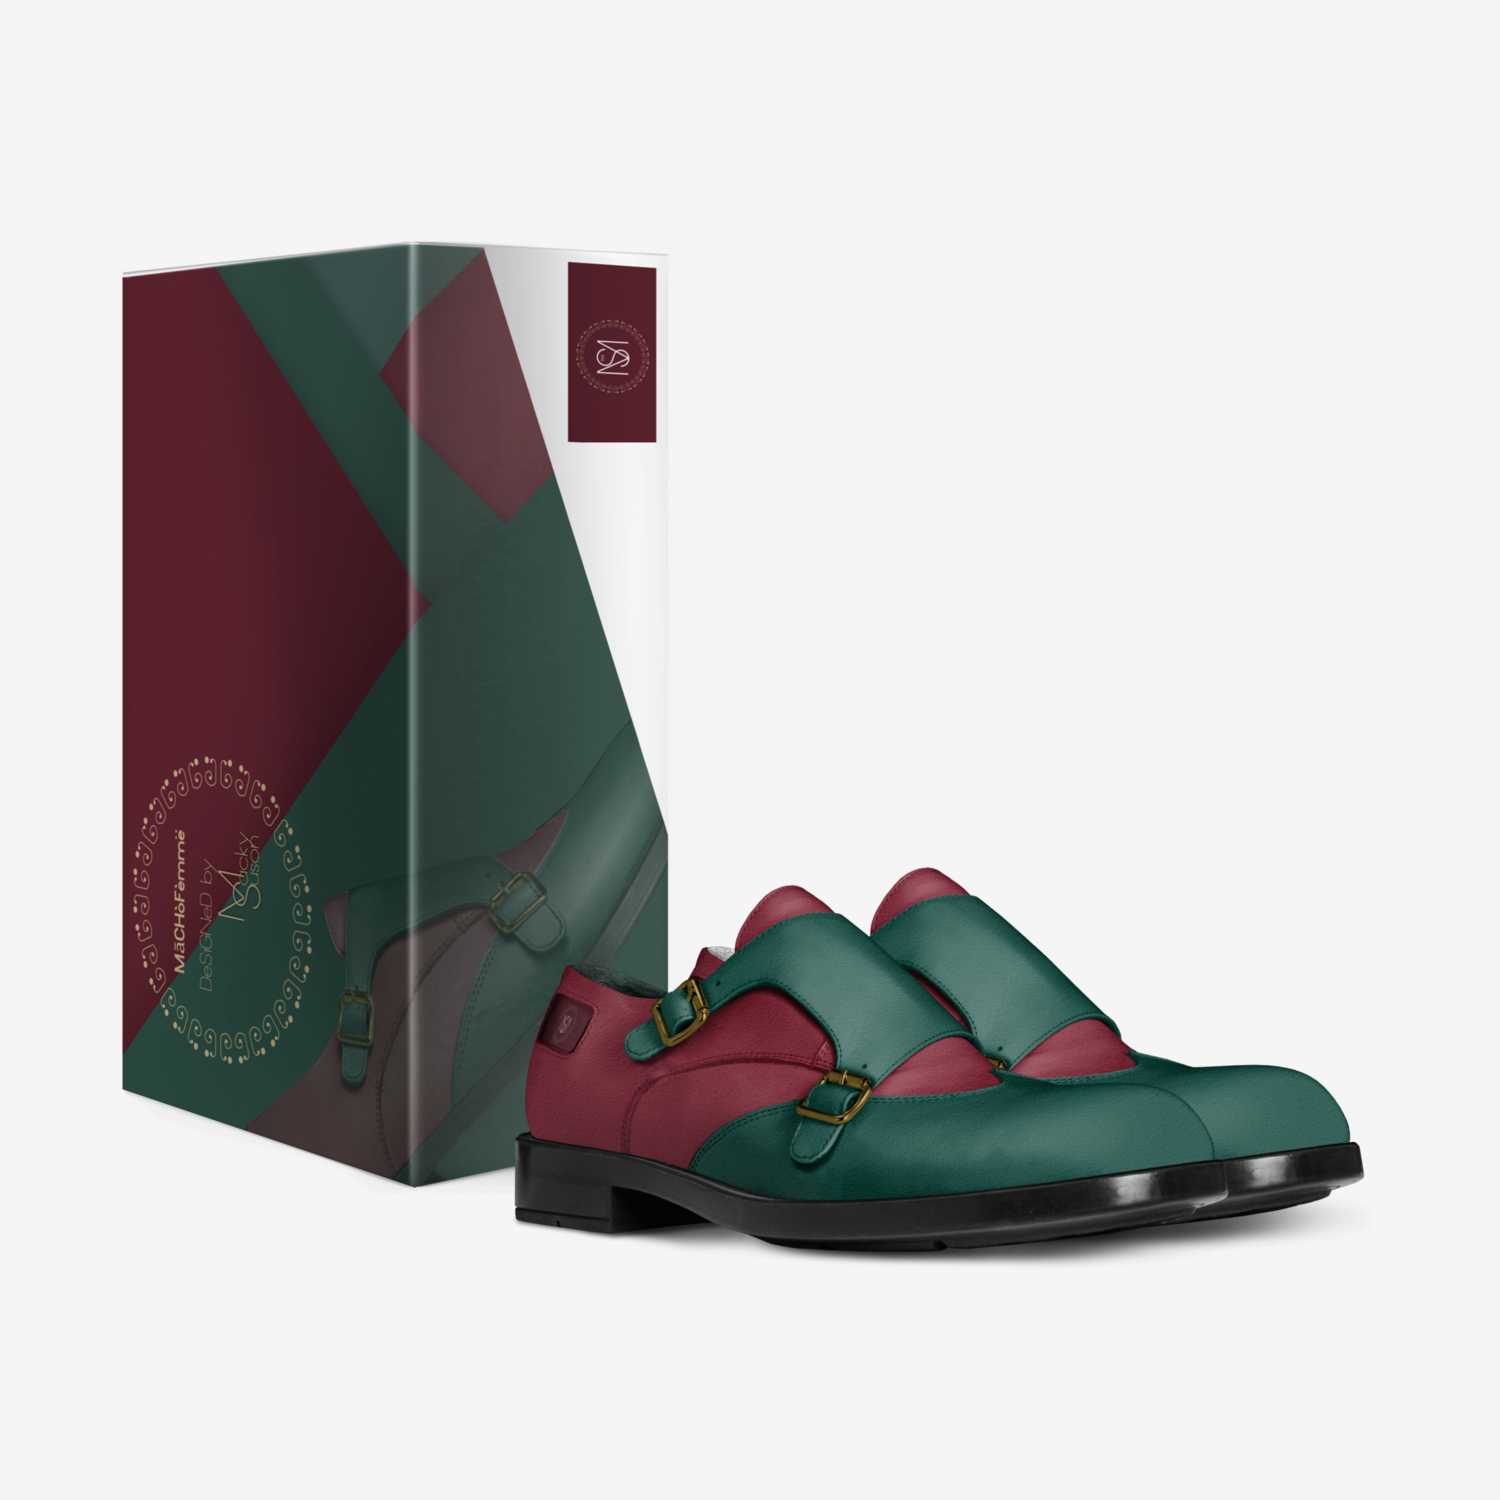 MāCHò custom made in Italy shoes by Macky Suson | Box view